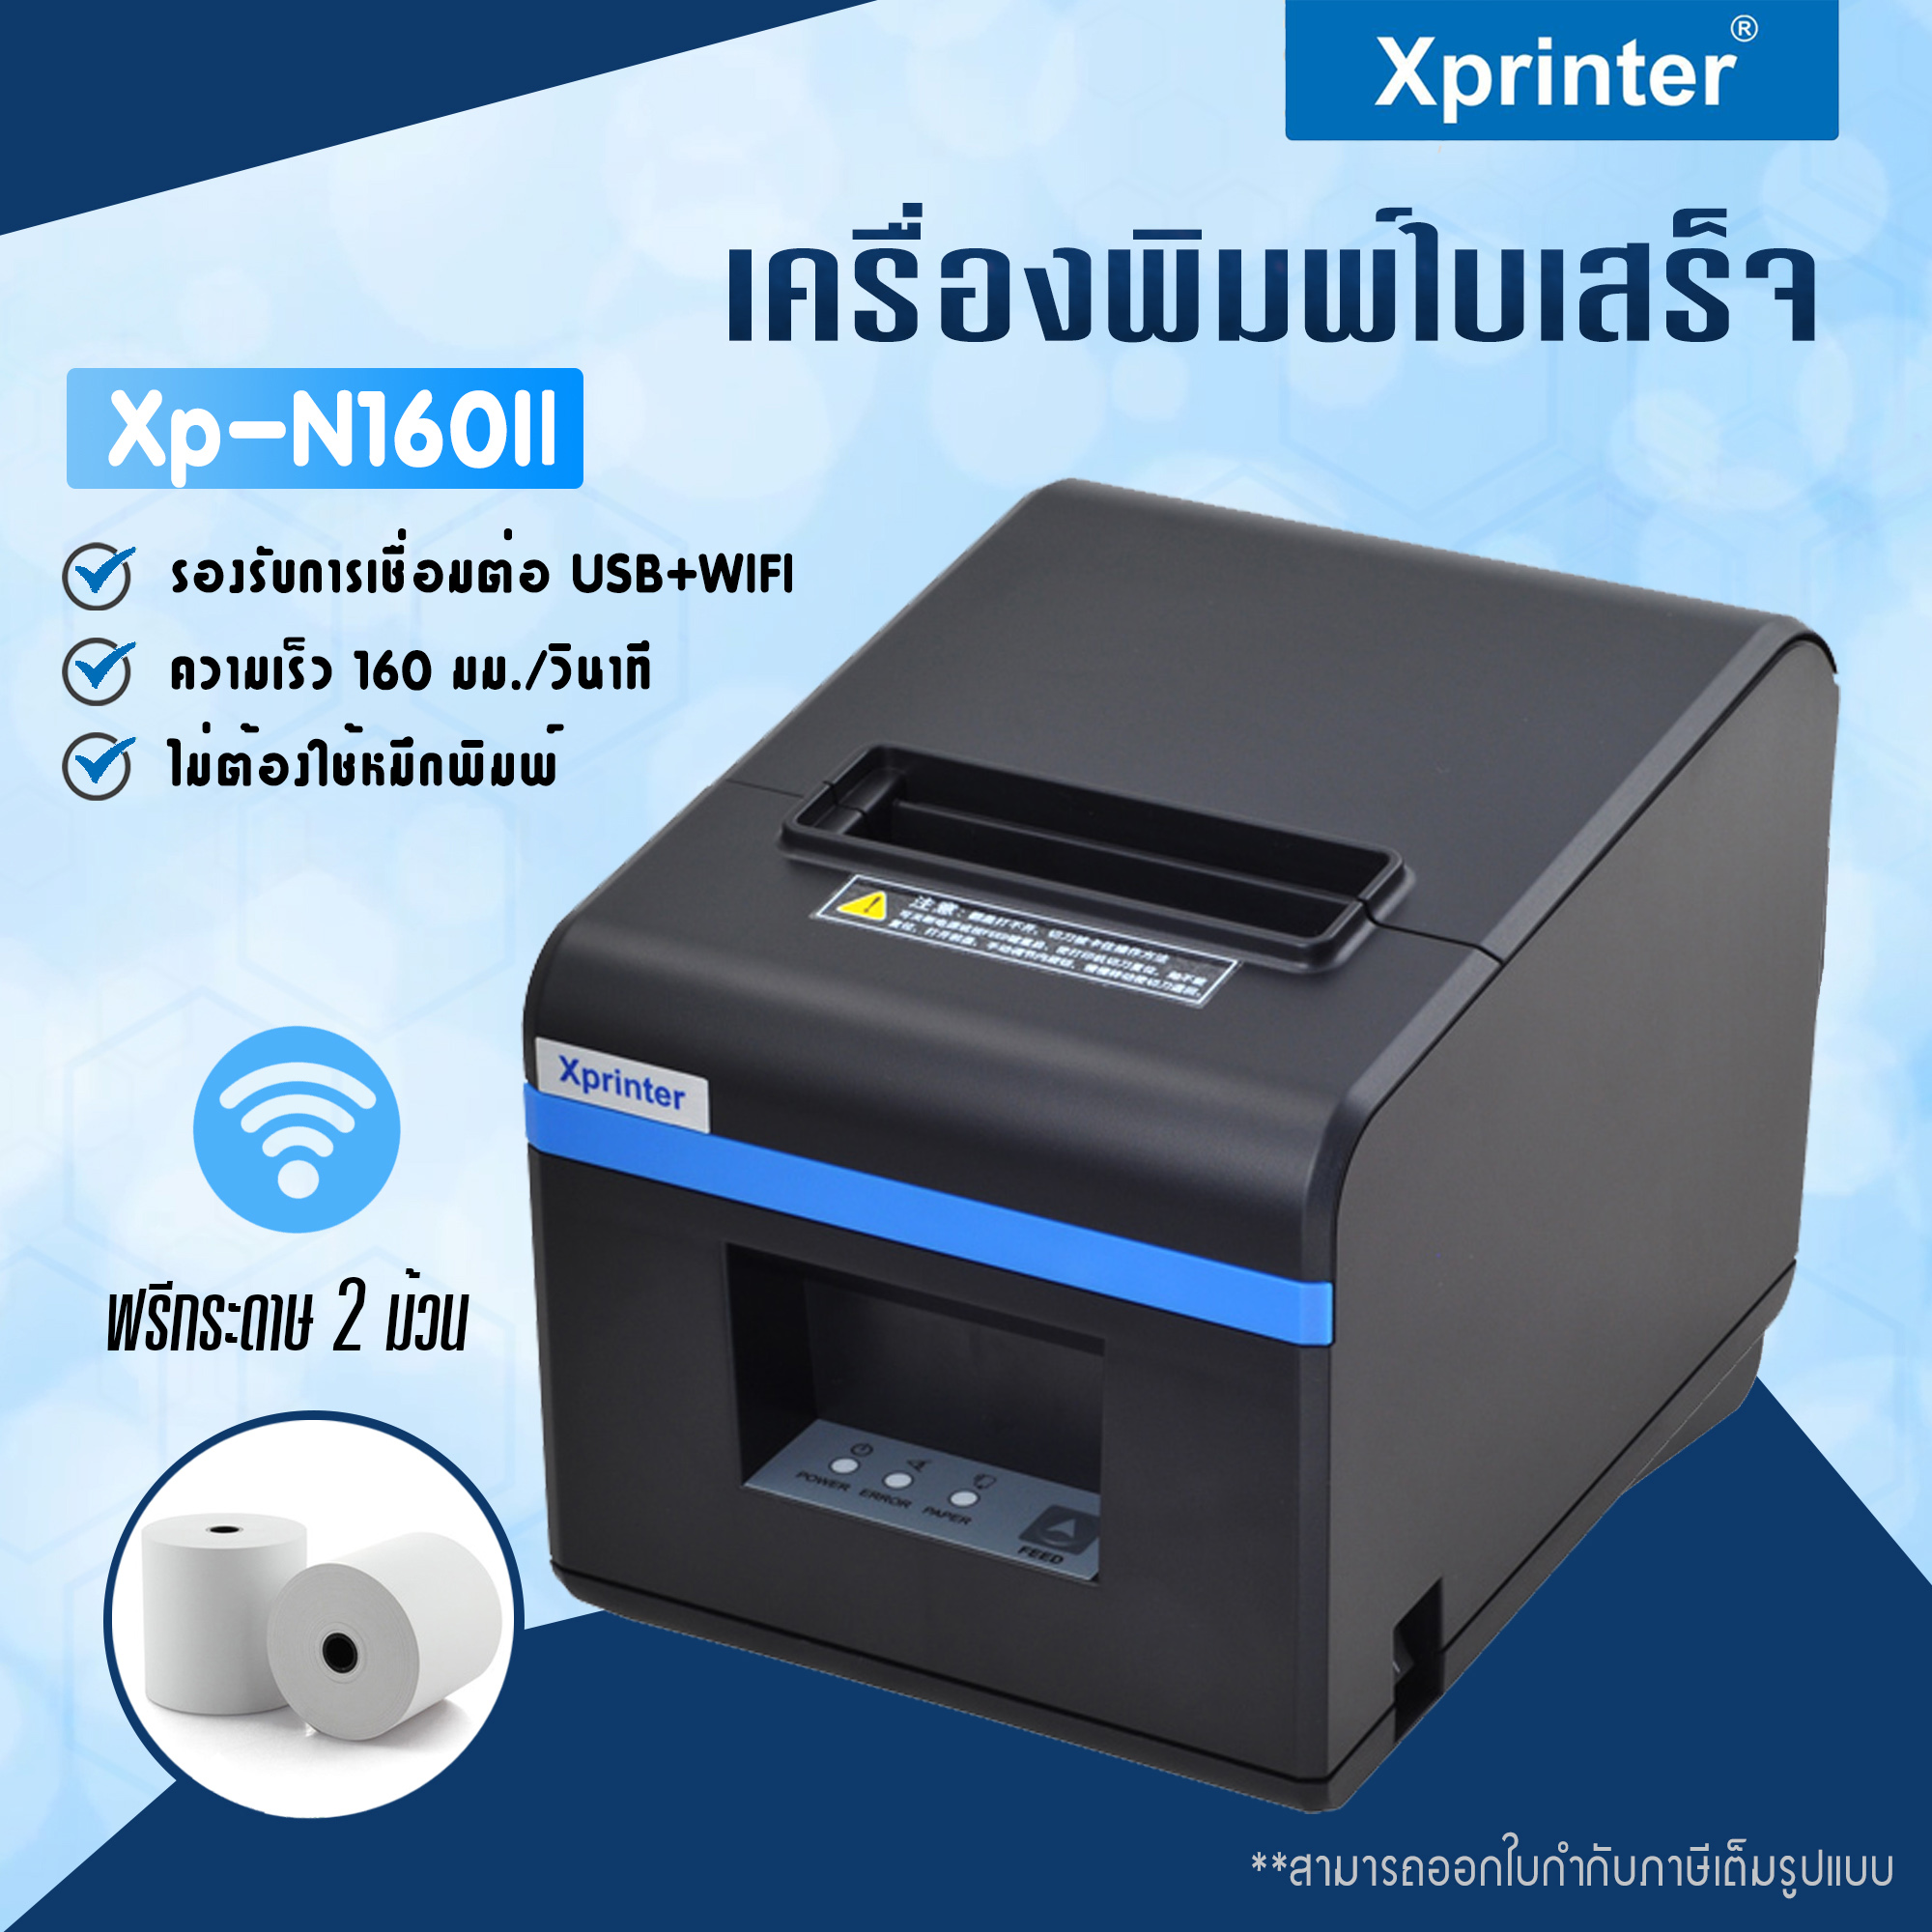 Xprinter เครื่องพิมพ์ใบเสร็จ 80 มม. เครื่องพิมพ์สลิปความร้อน รองรับการเชื่อมต่อ WiFi+USB ตัดกระดาษอัตโนมัติ เชื่อมต่อกับแอฟยอดนิยมอย่าง Loyverse Pos ได้เป็นอย่างดี